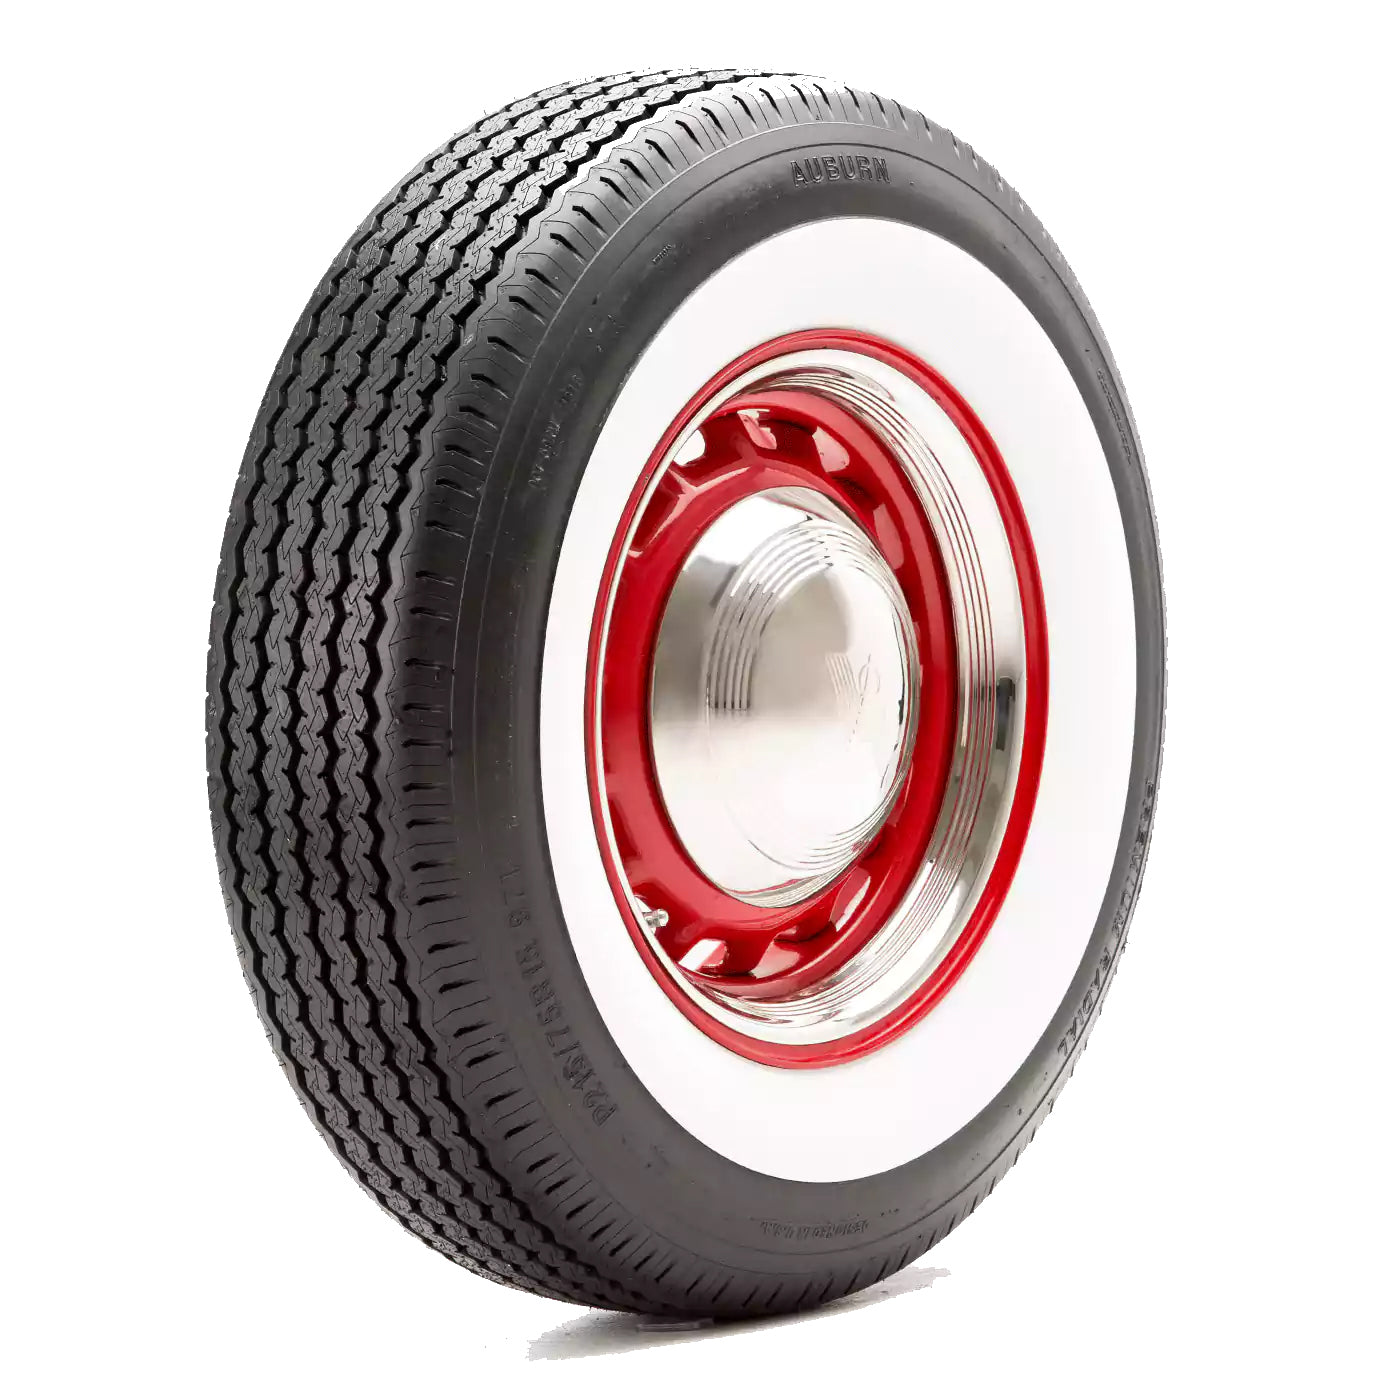 Auburn Radial 2 3/4" Whitewall Tyre - HR78R14 / 235/75R14